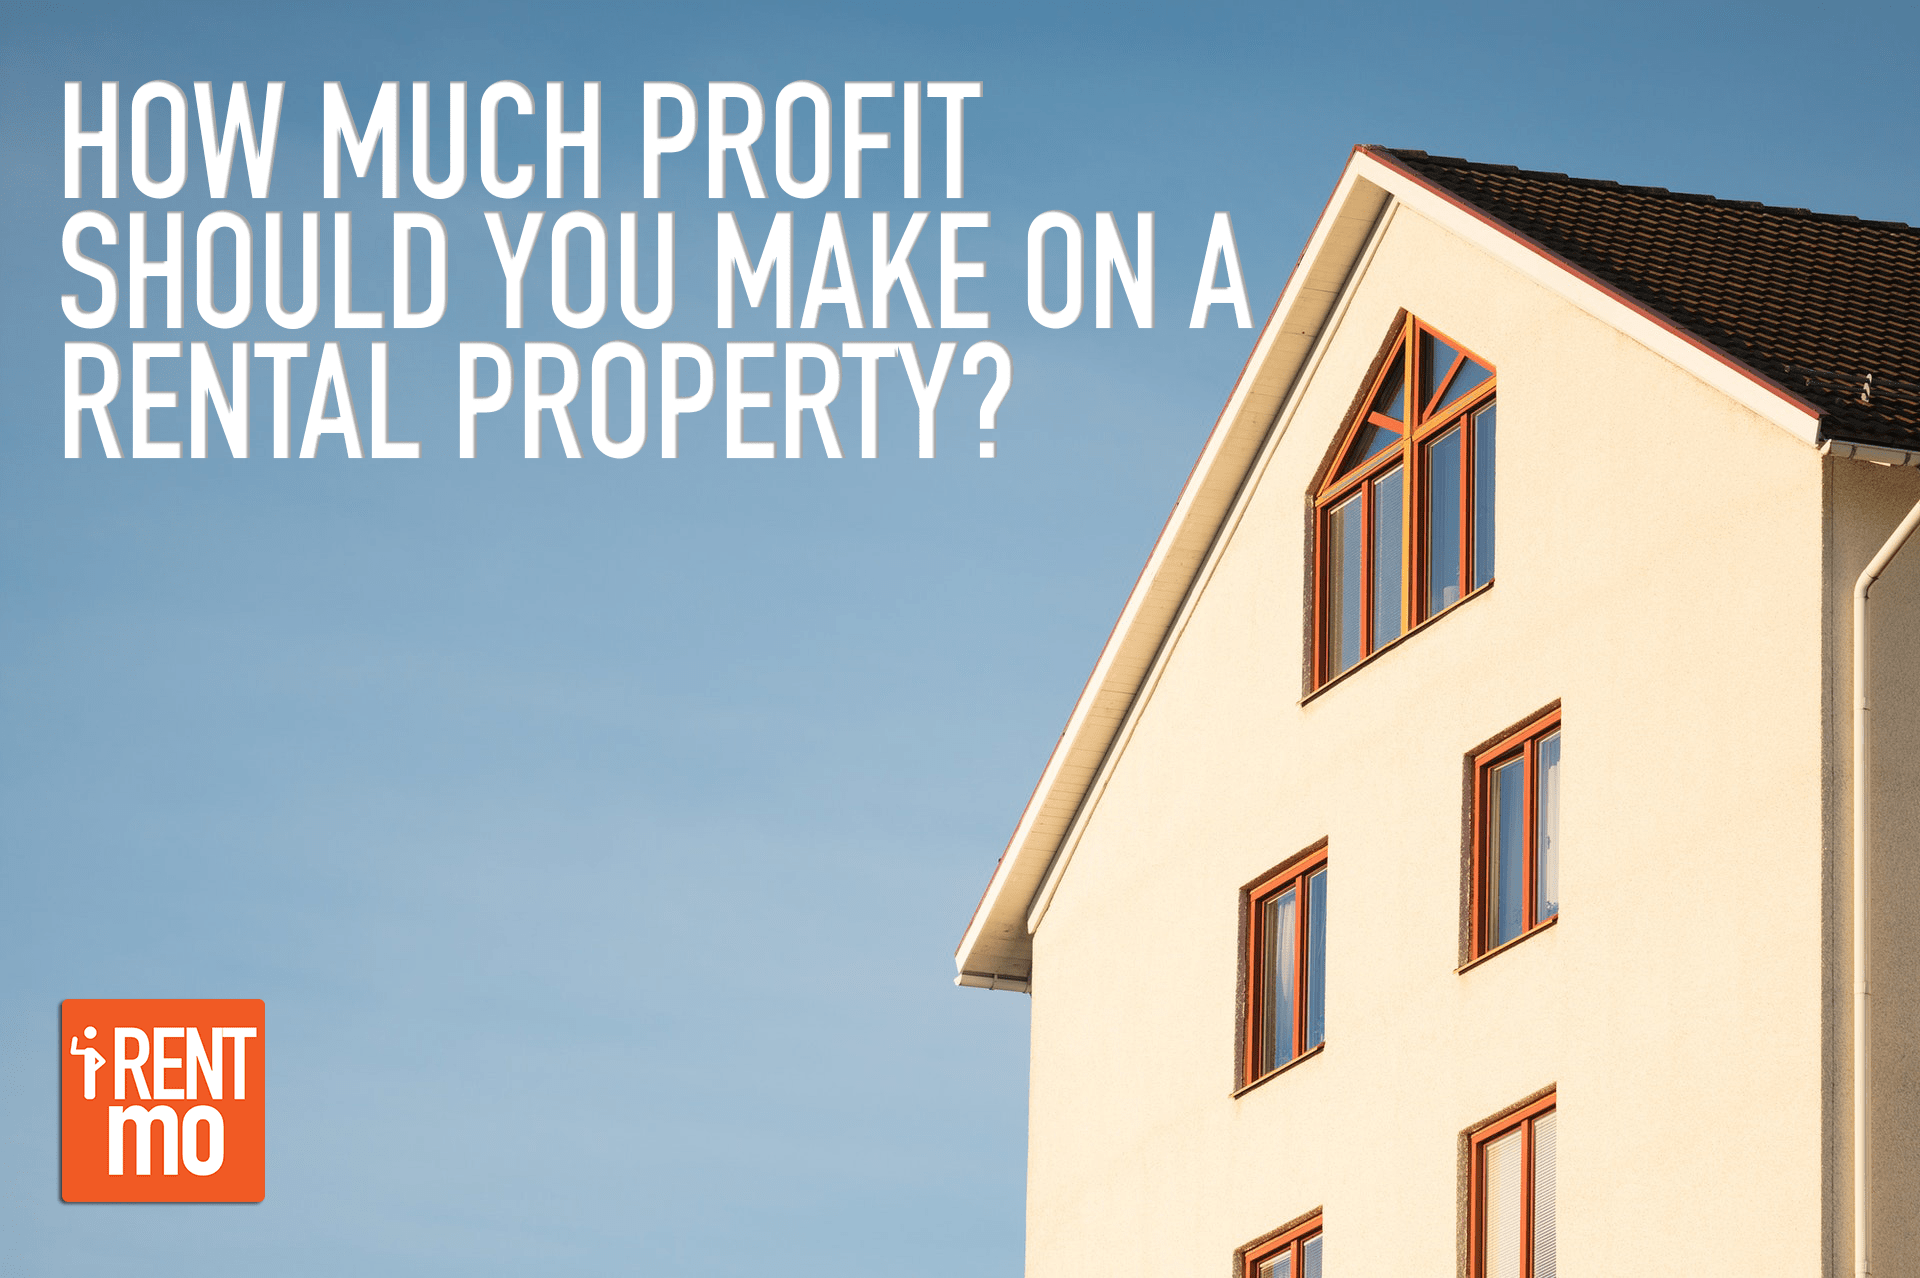 rental property business profit image